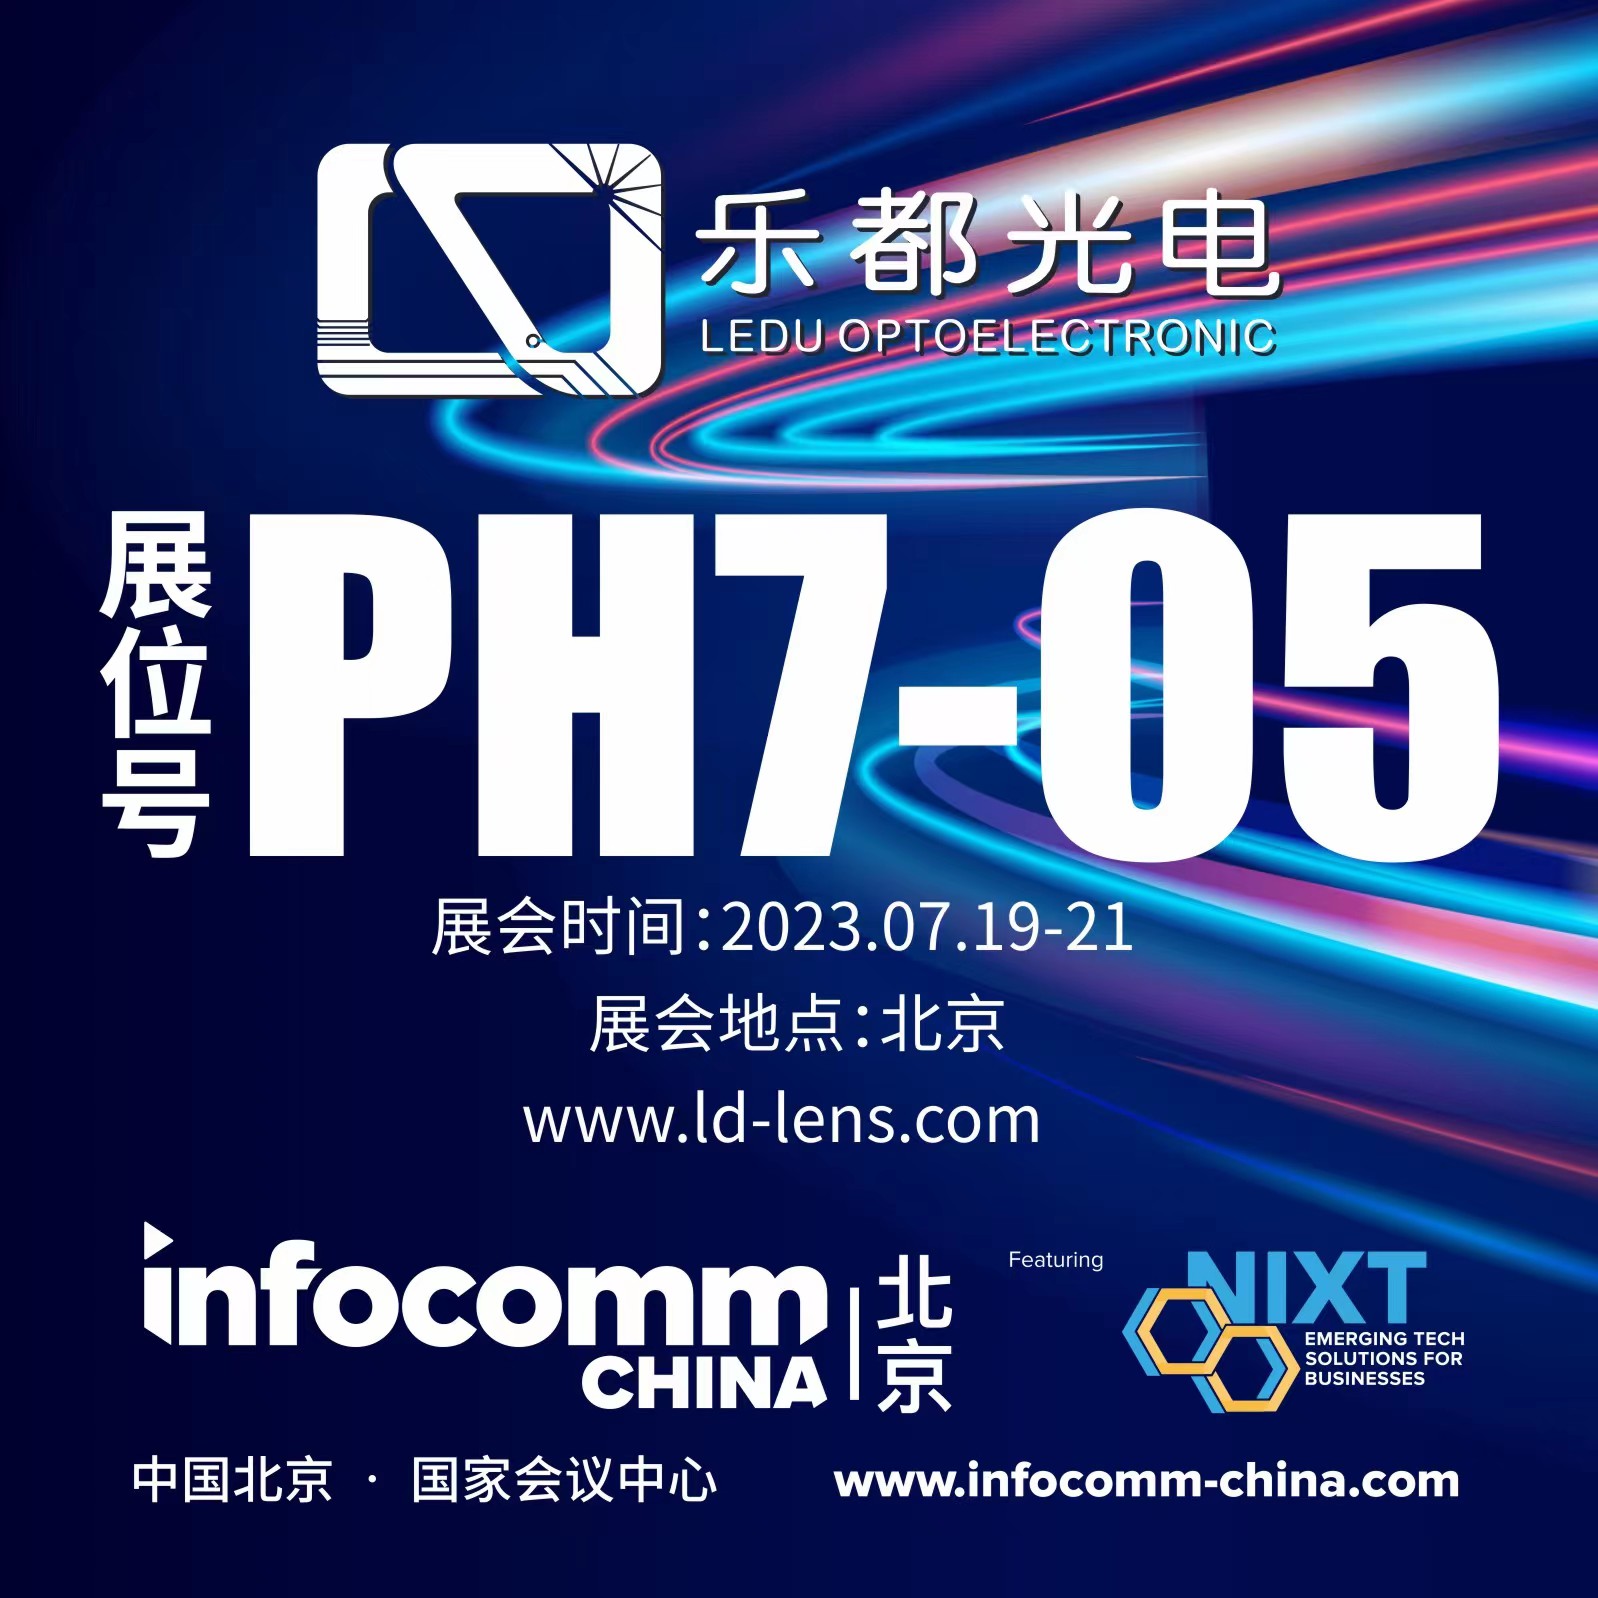 "Ledu Optoelectronics" presents new products at 2023 Beijing InfoComm China